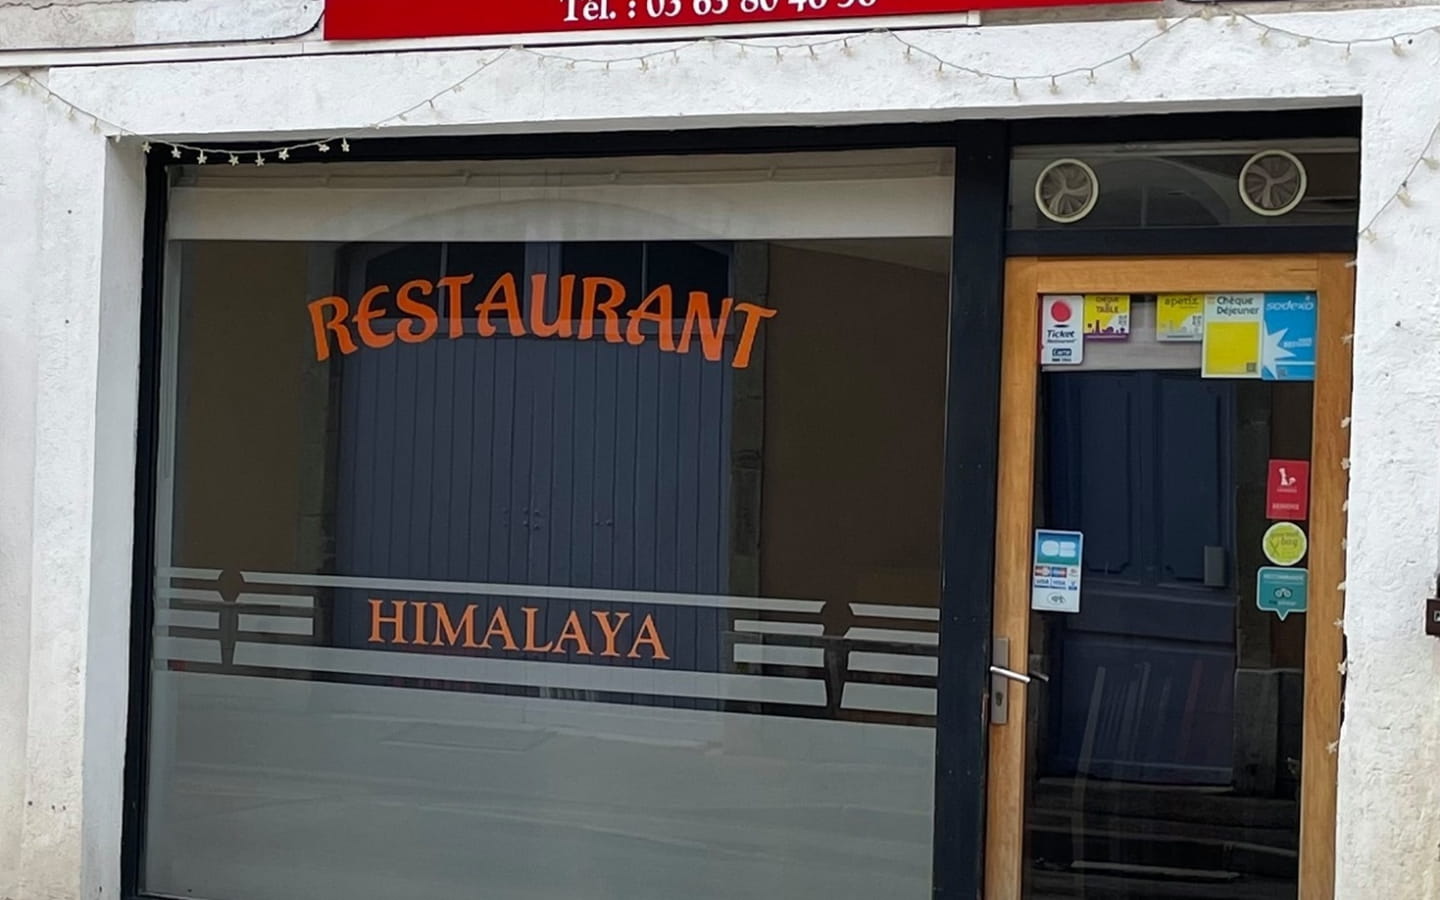 Restaurant - Himalaya